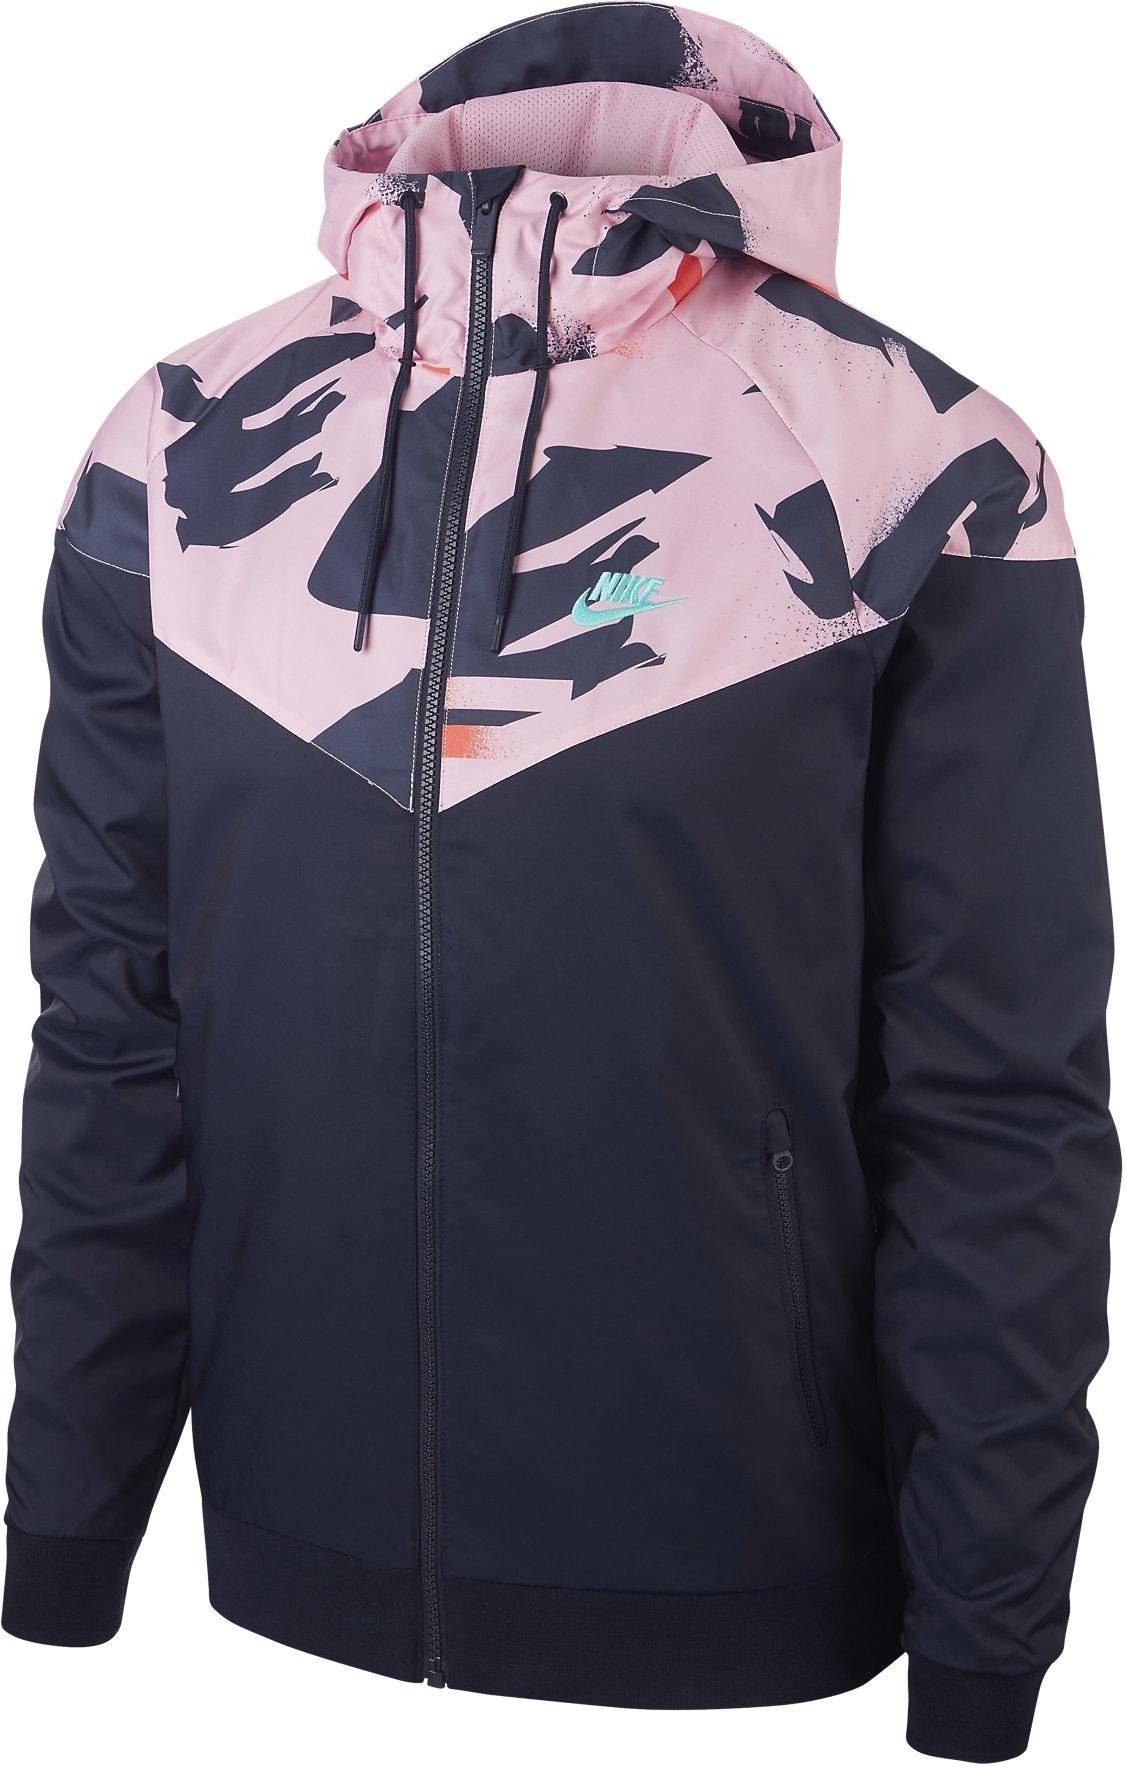 Hooded jacket Nike M NSW WR JKT FSTVL